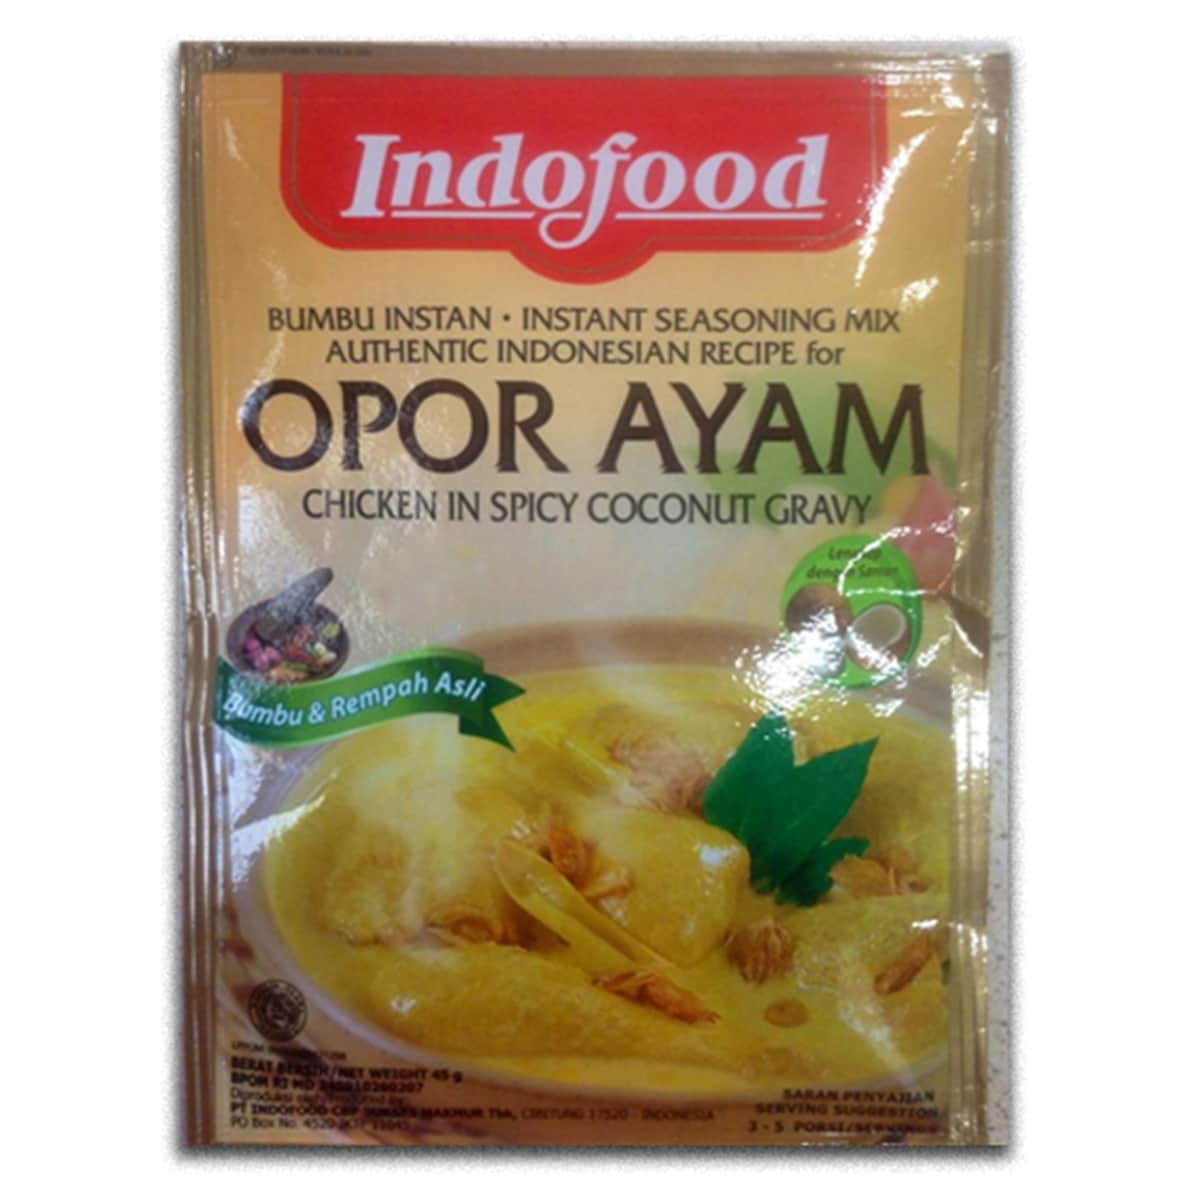 Buy Indofood Opor Ayam (Chicken in Spicy Coconut Gravy) - 45 gm